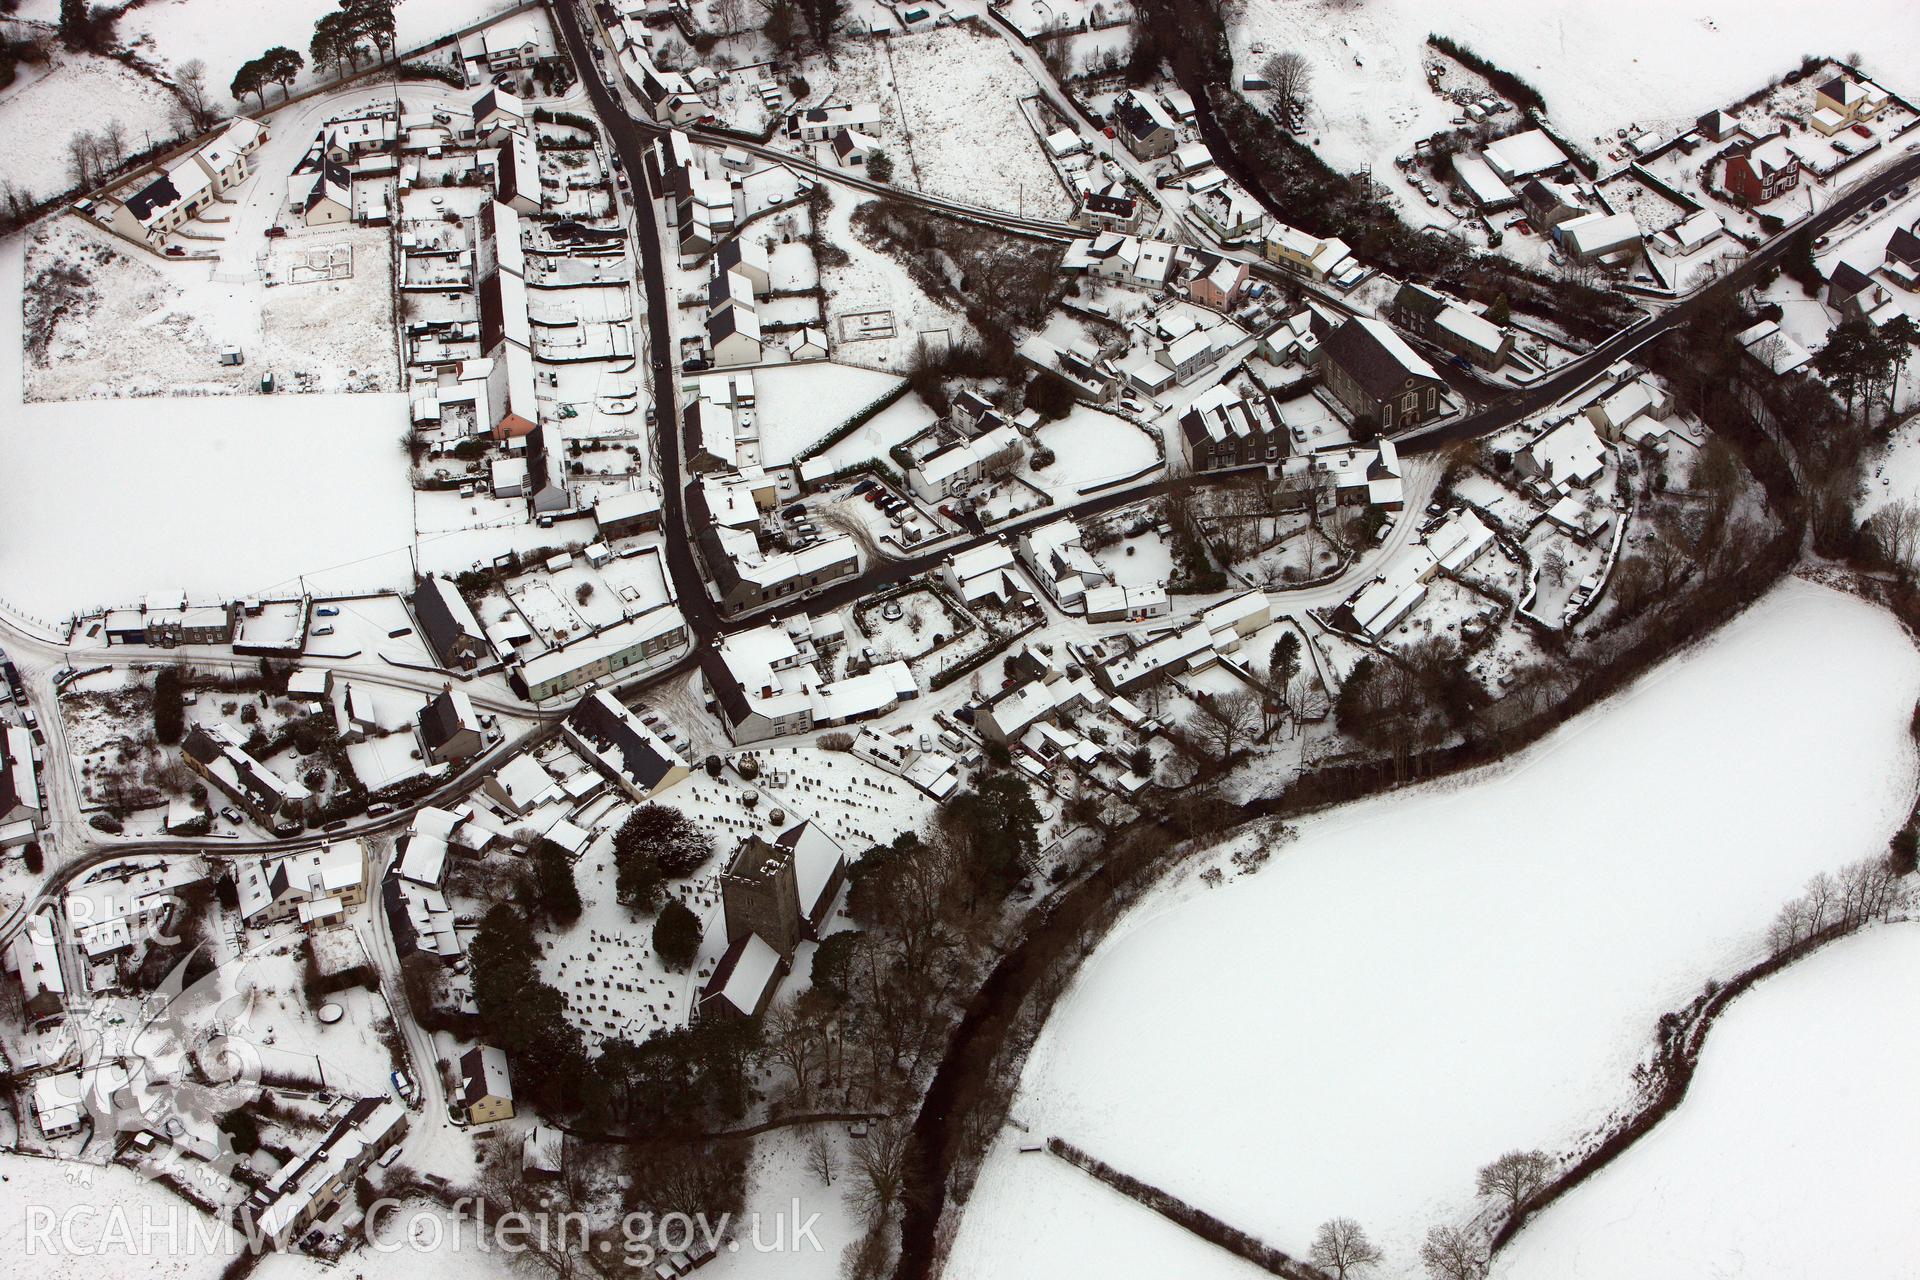 RCAHMW colour oblique aerial photograph of Llanddewi Brefi under snow, by Toby Driver, 02/12/2010.